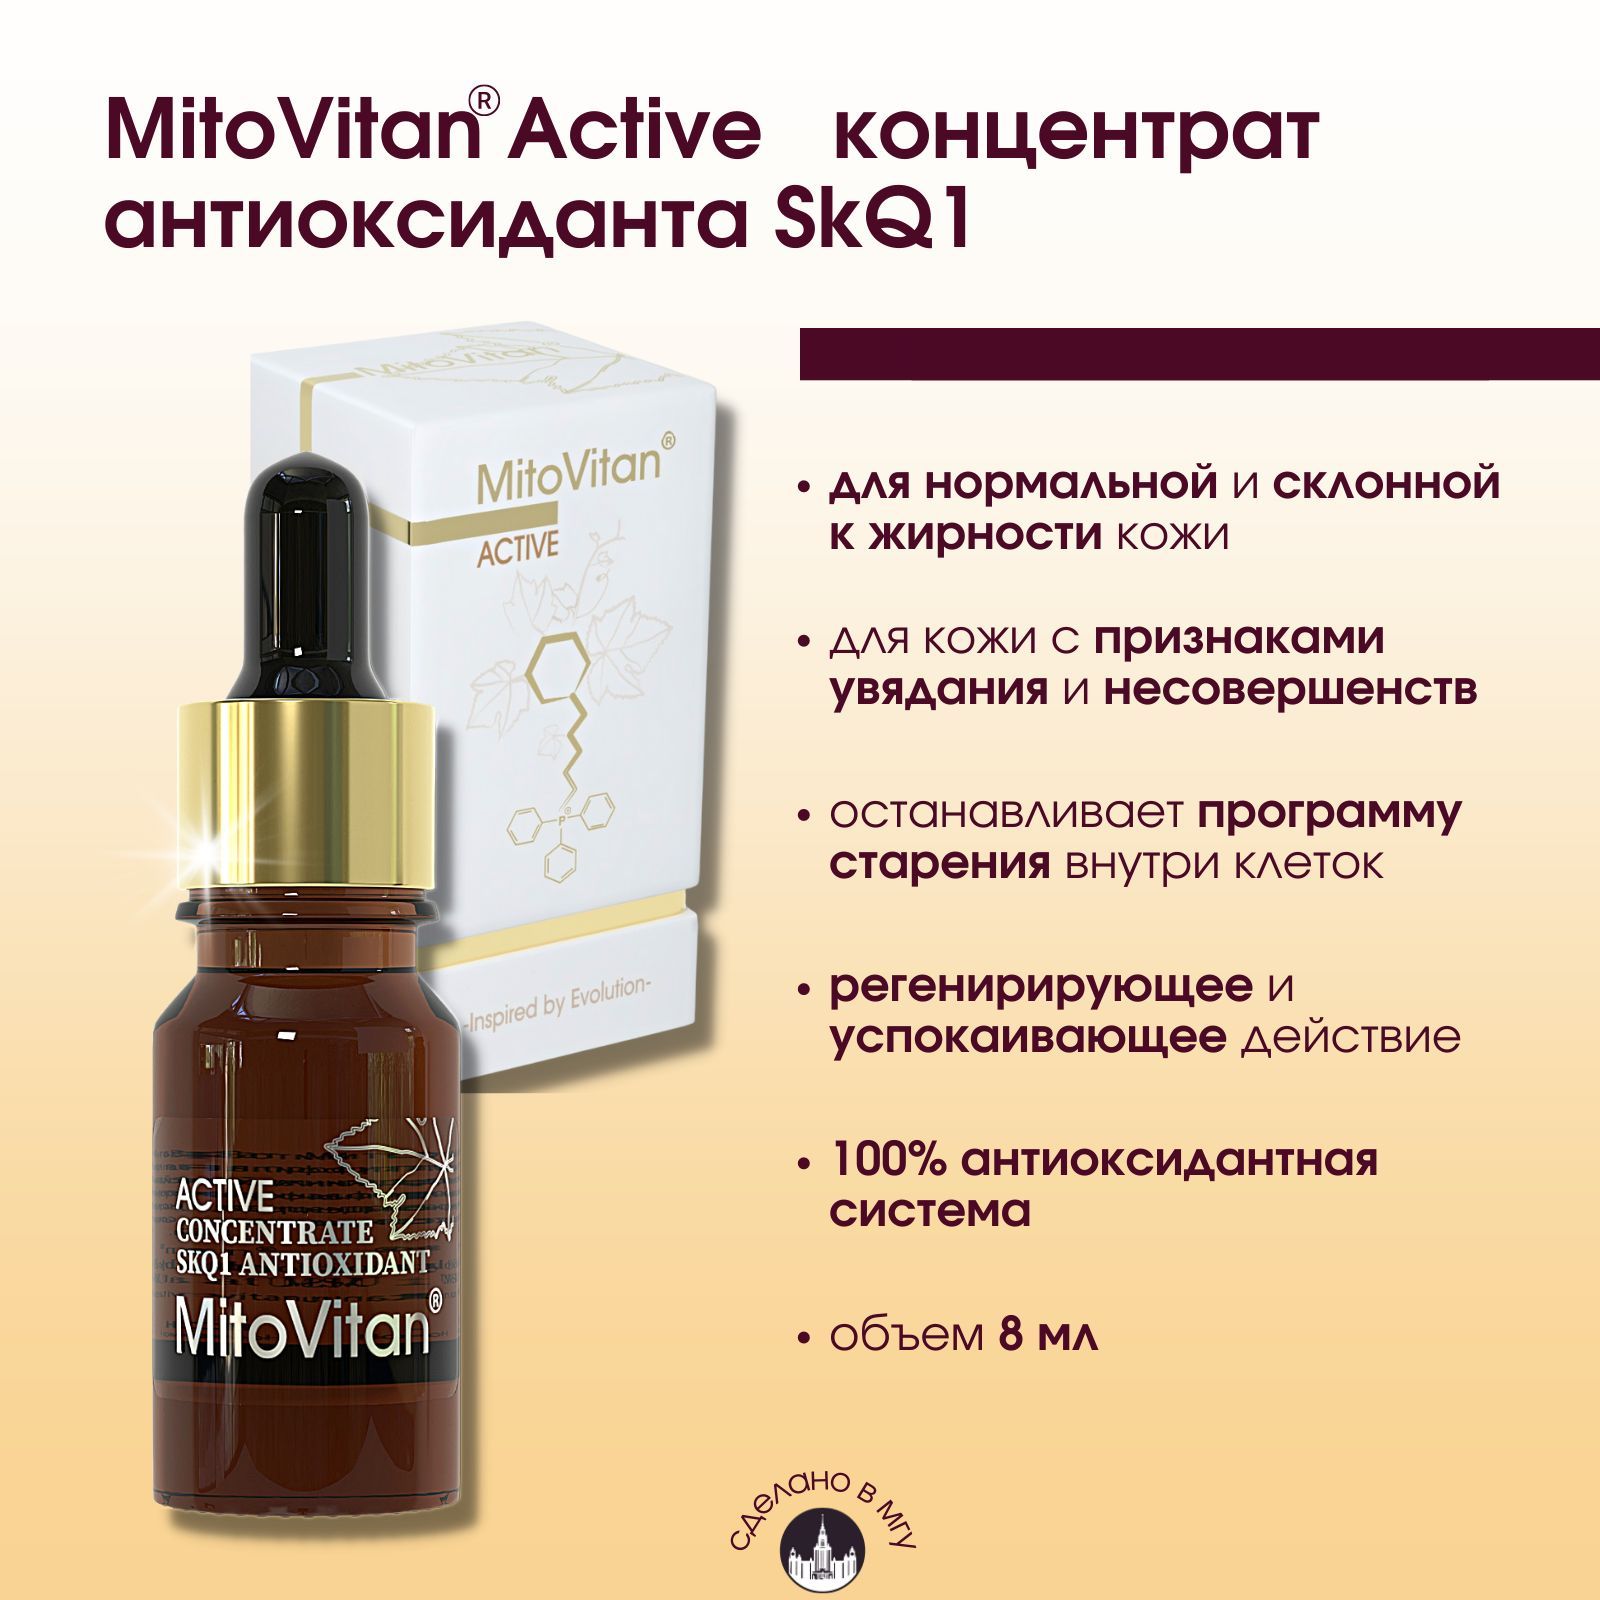 MITOVITAN Active концентрат. МИТОВИТАН Актив. MITOVITAN Active+ концентрат антиоксиданта skq1. MITOVITAN Active Set концентрат антиоксиданта skq1 для лица, шеи и области декольте.